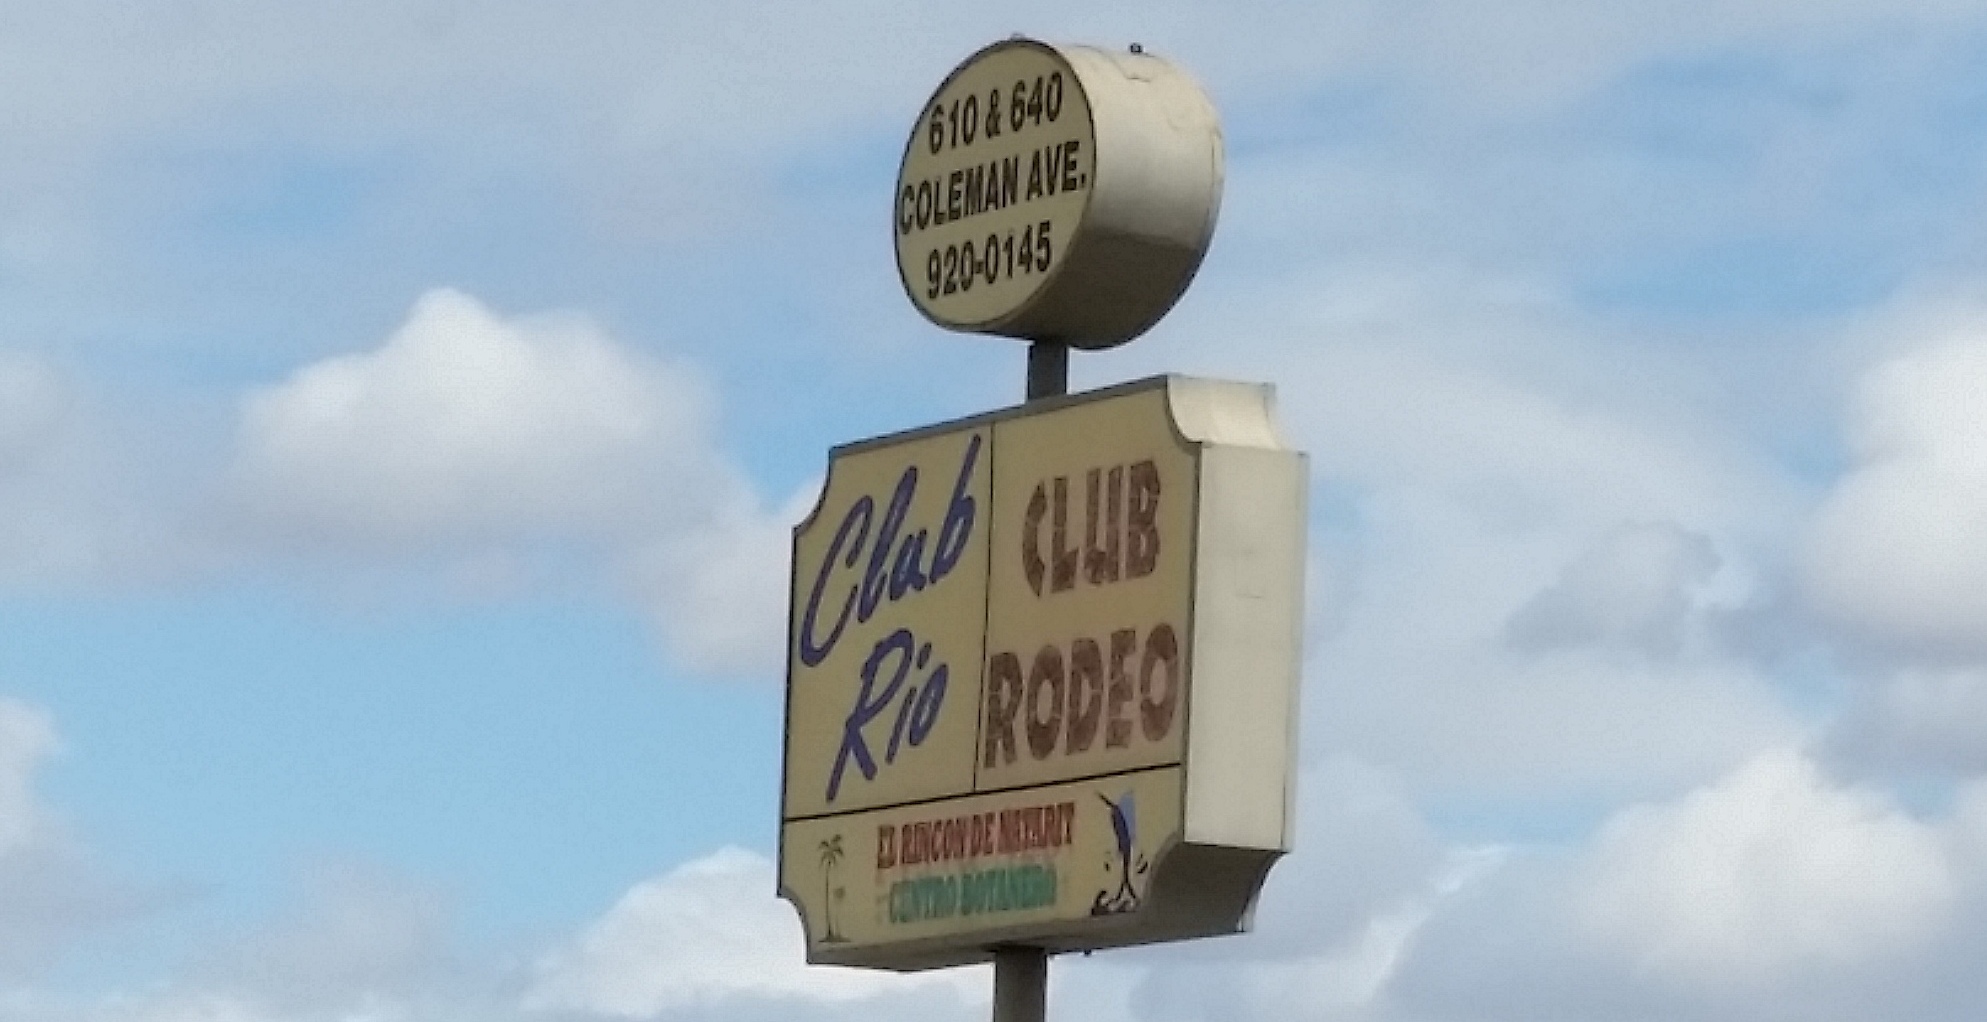 Rodeo Club San Jose